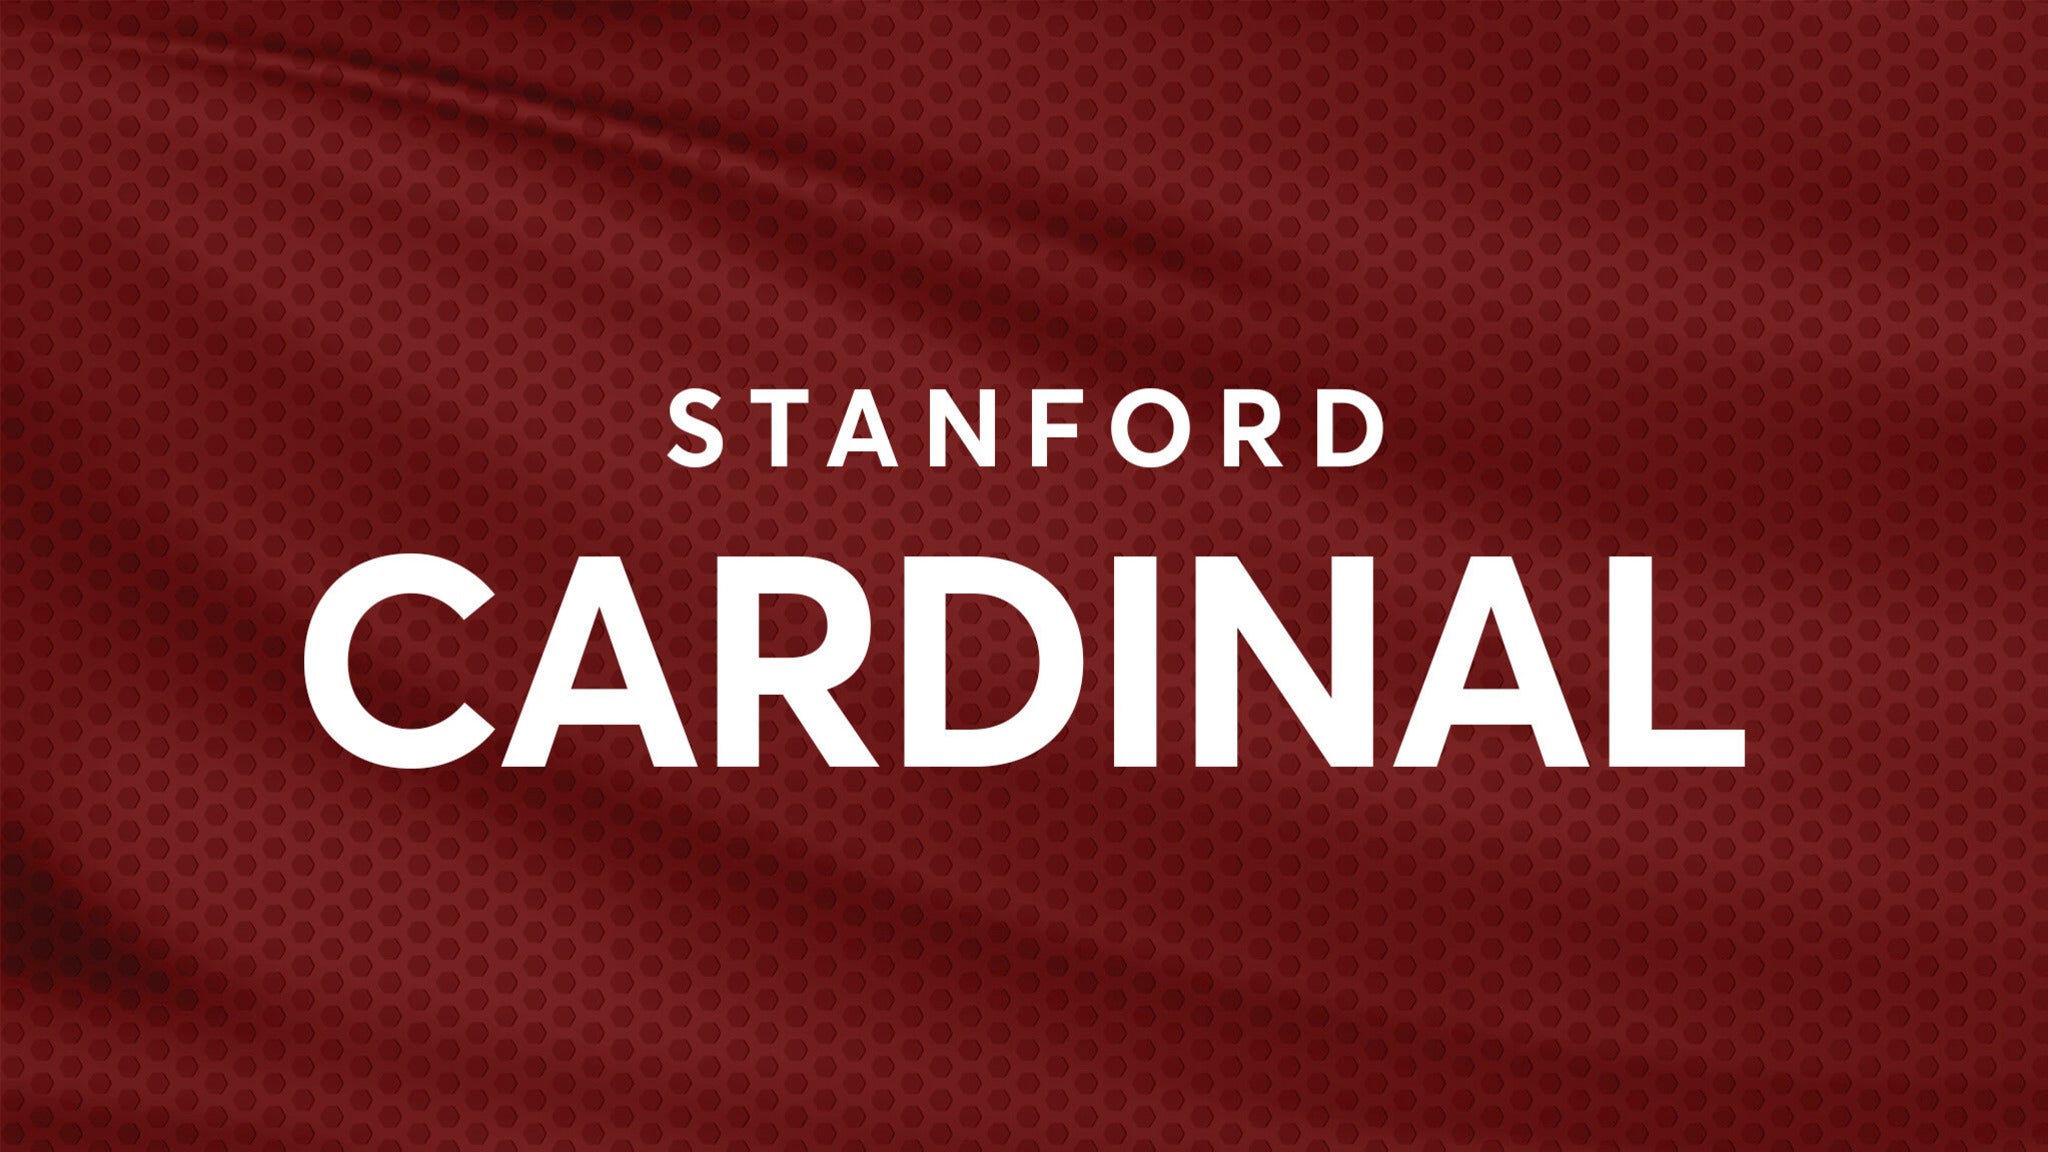 Stanford Cardinal Football vs. BYU Cougars Football